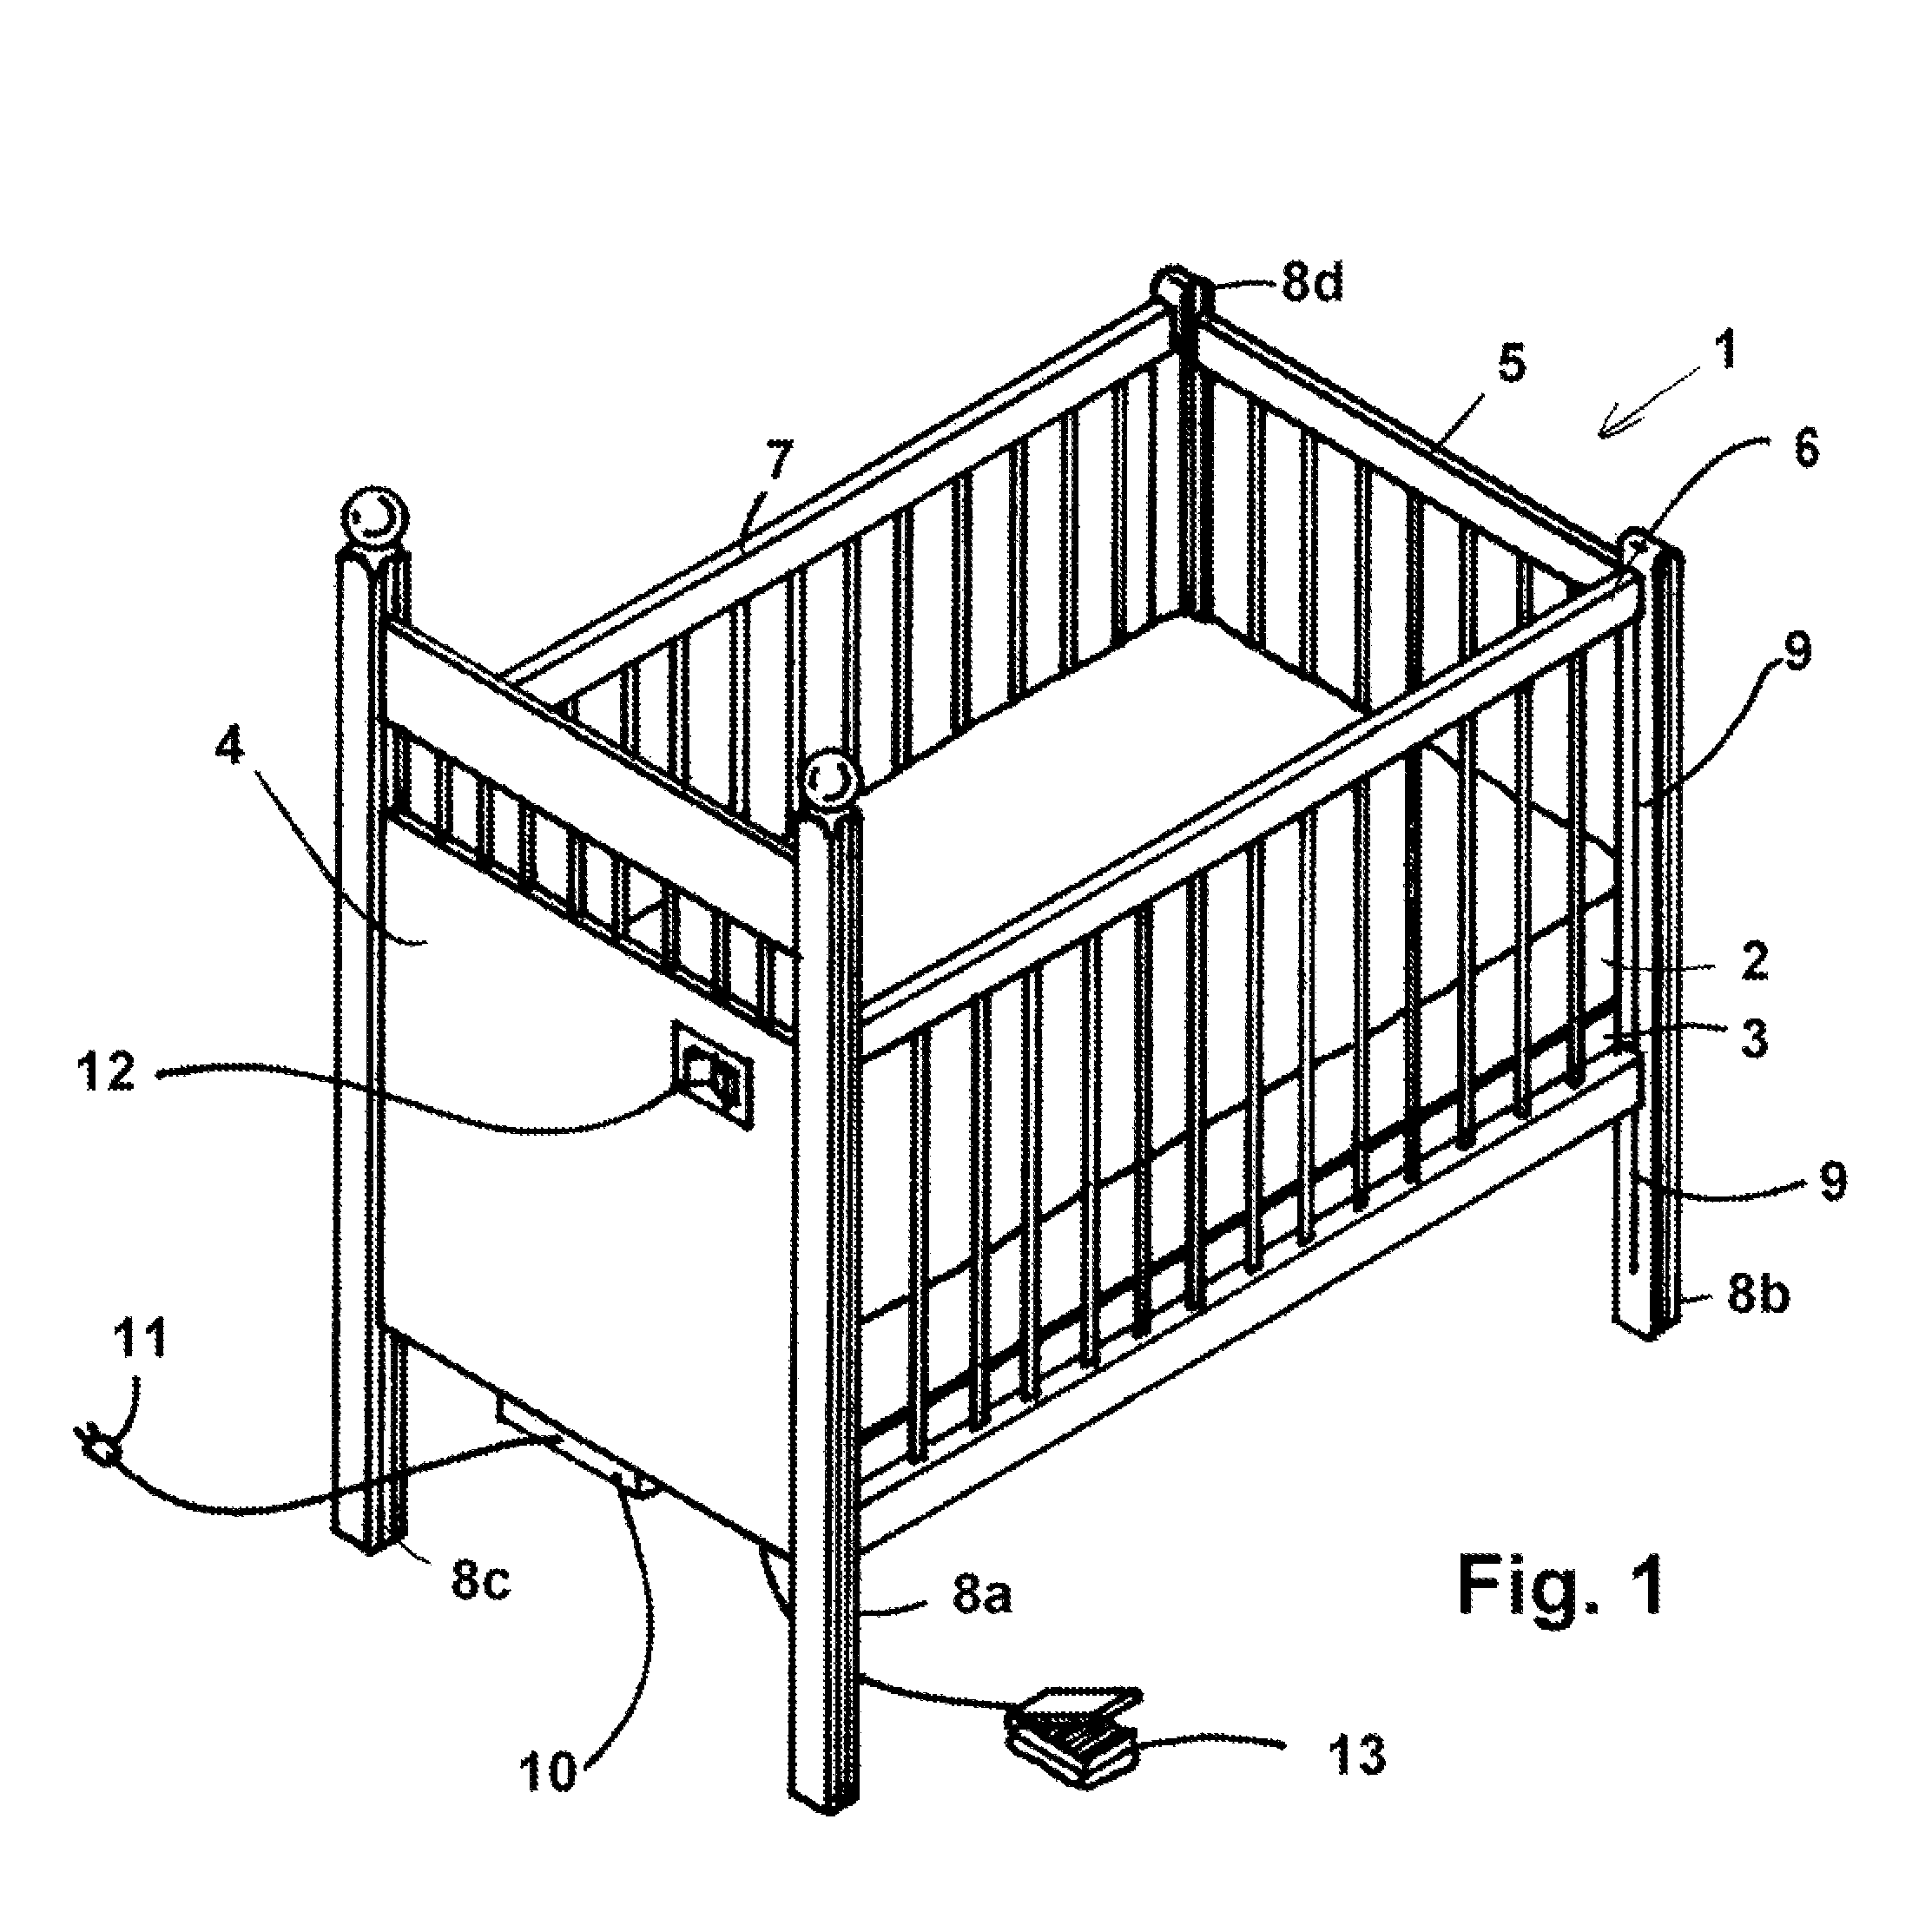 Crib mattress elevation system and control unit